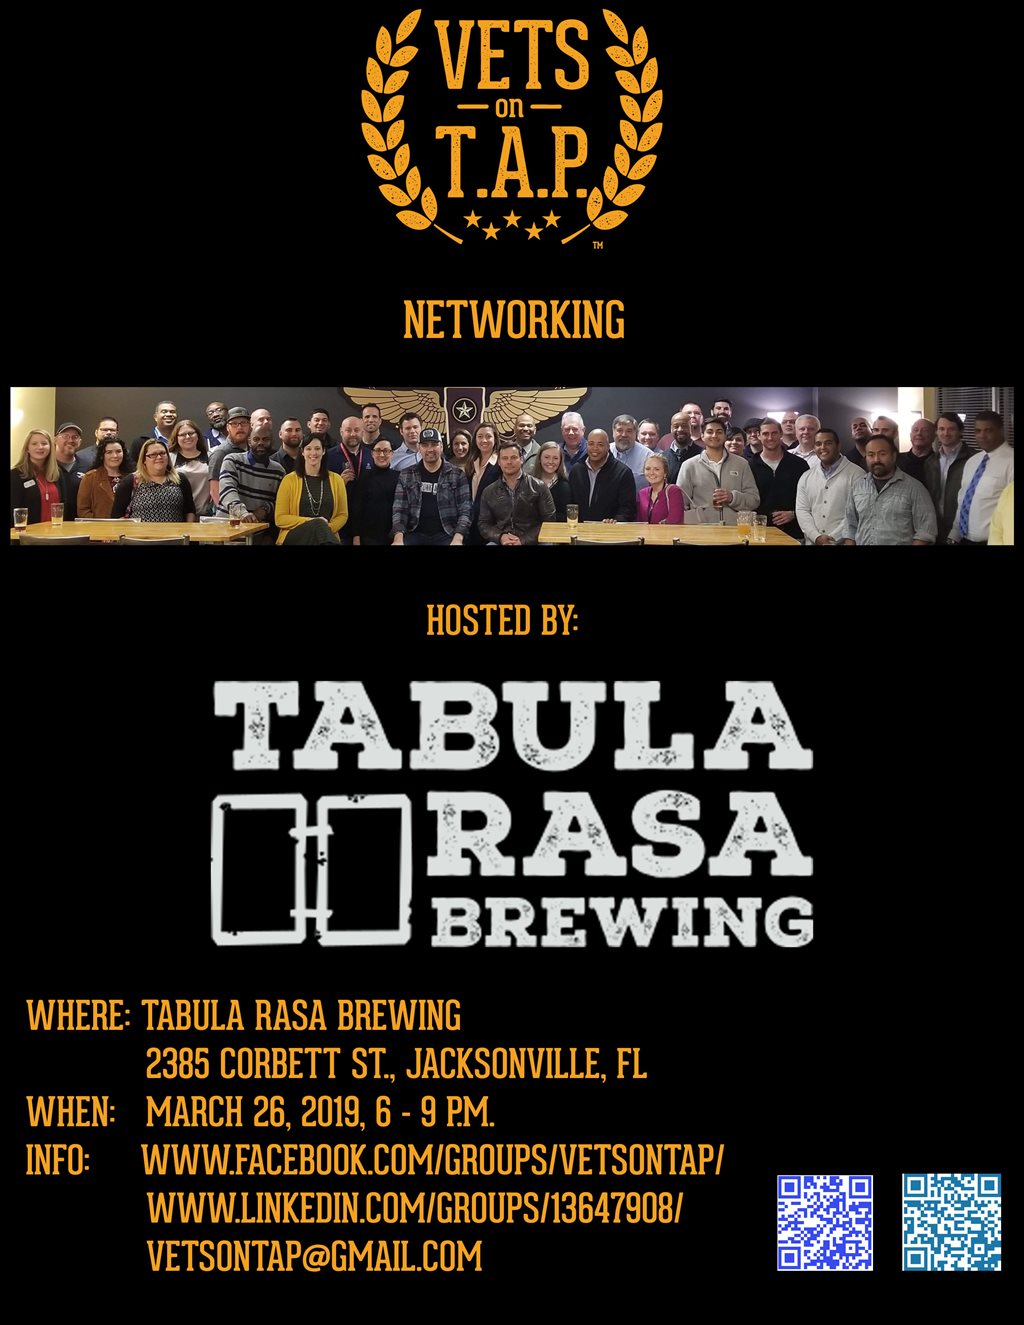 Vets on TAP presents Networking at Tabula Rasa Brewing. 